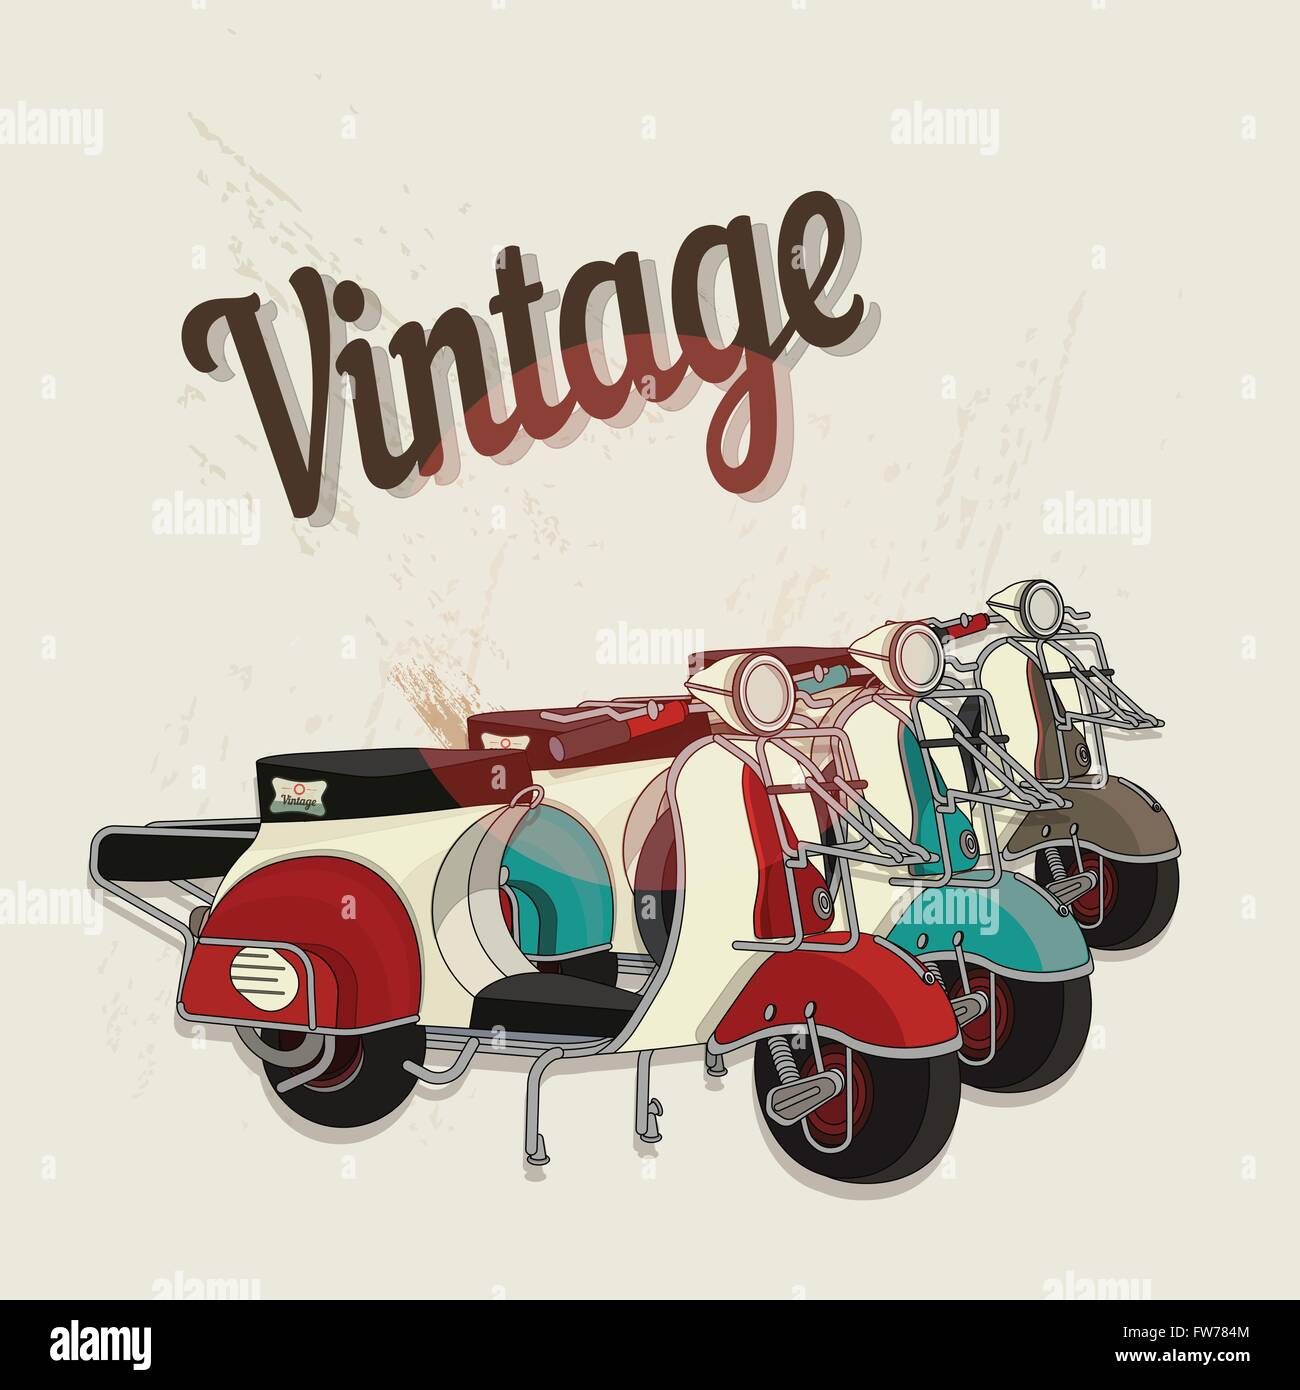 vintage motorbike poster Stock Vector